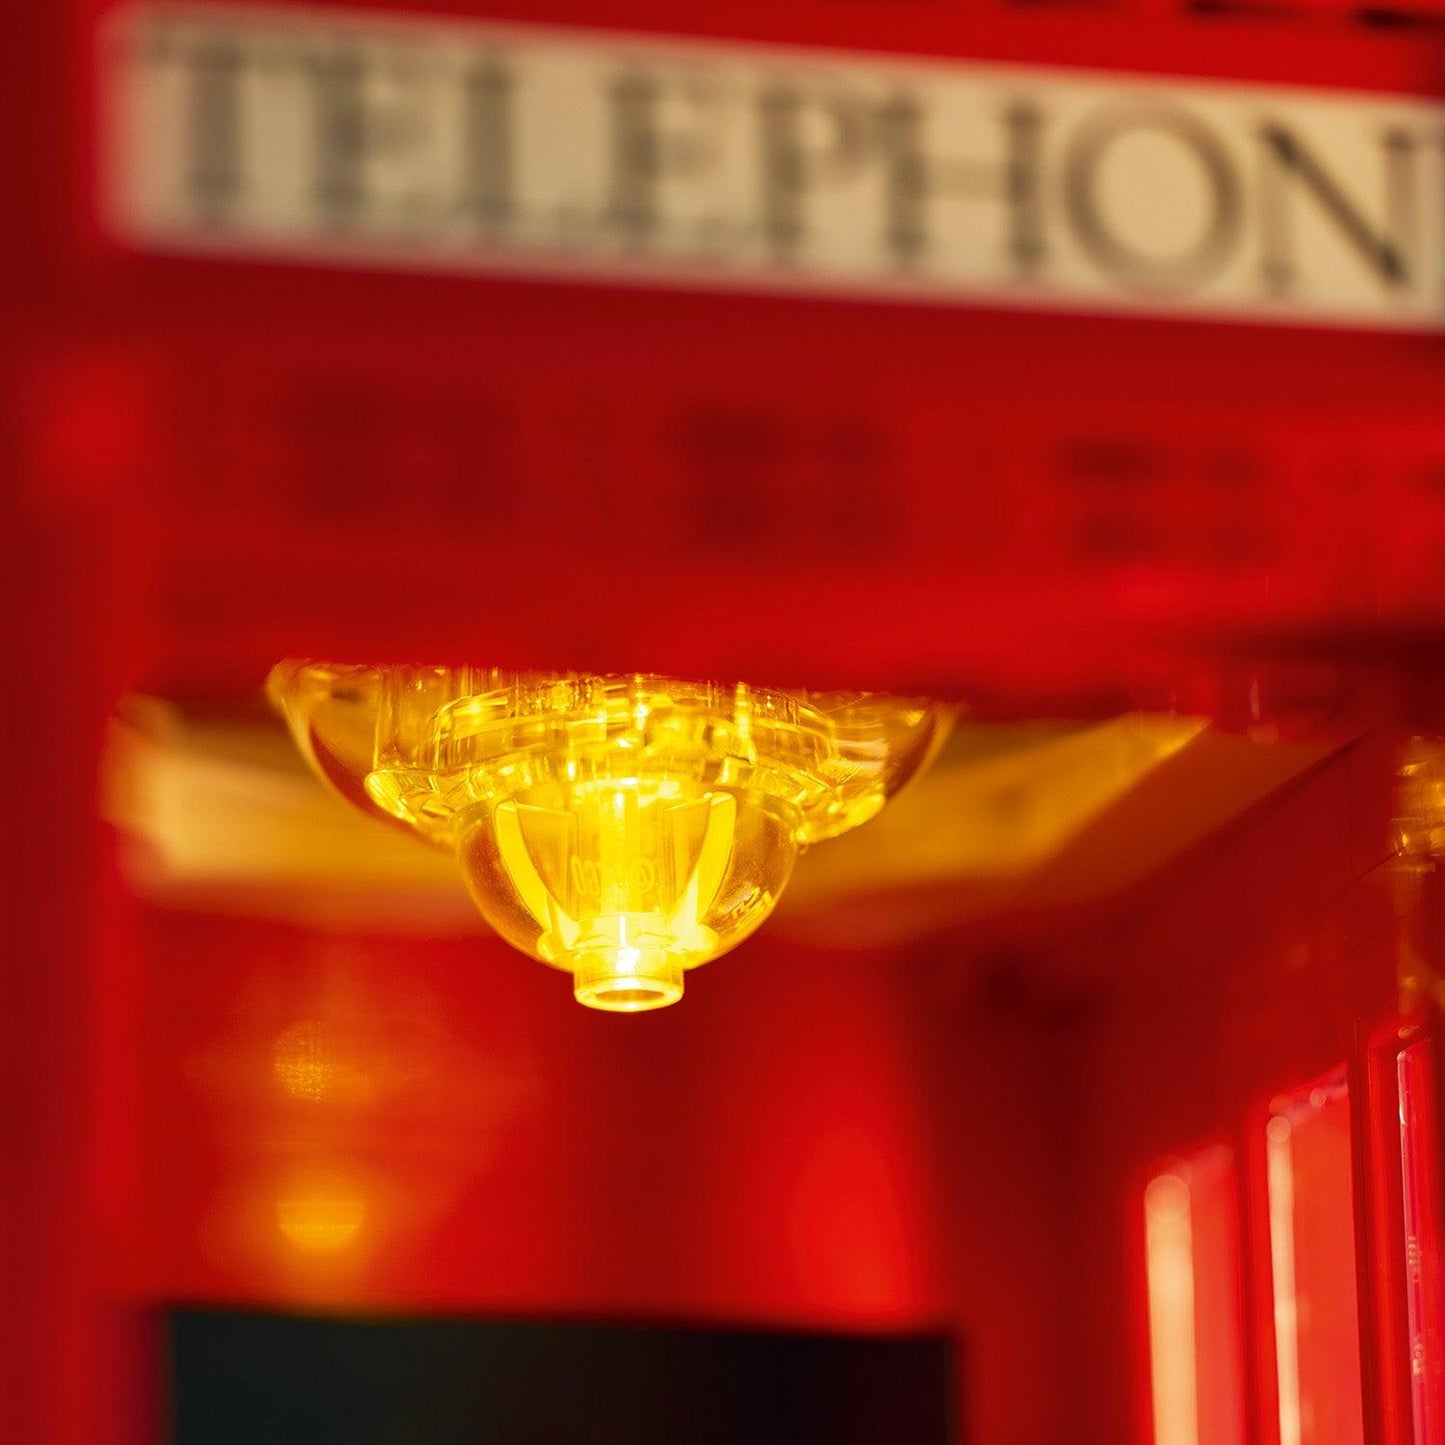 LEGO Rode Londense telefooncel 21347 Ideas | 2TTOYS ✓ Official shop<br>